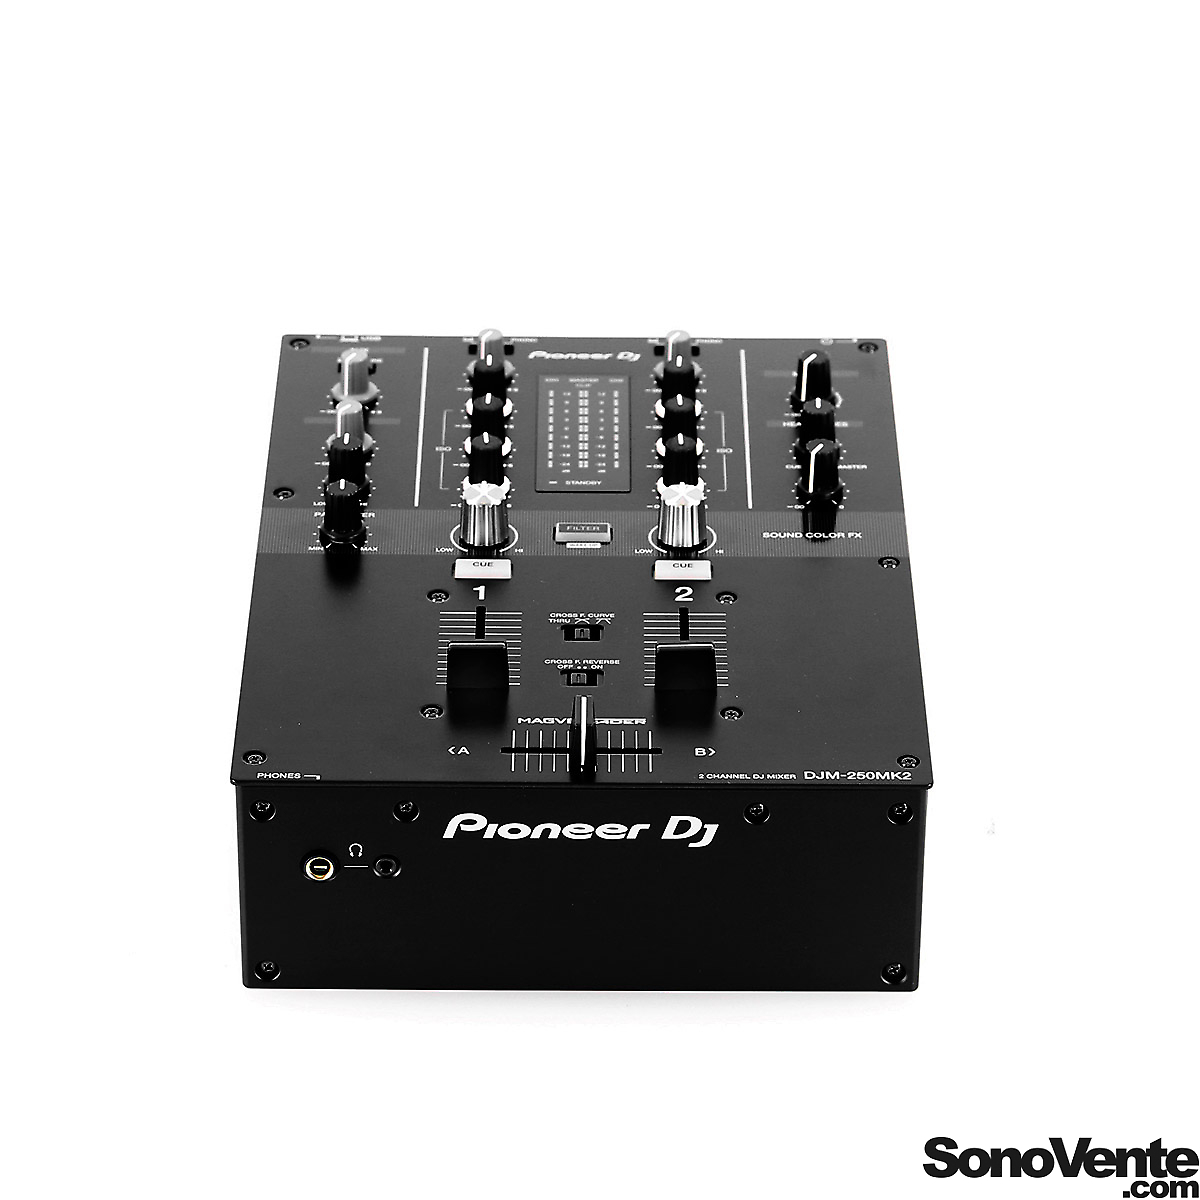 DJM 250 MK2 Pioneer DJ